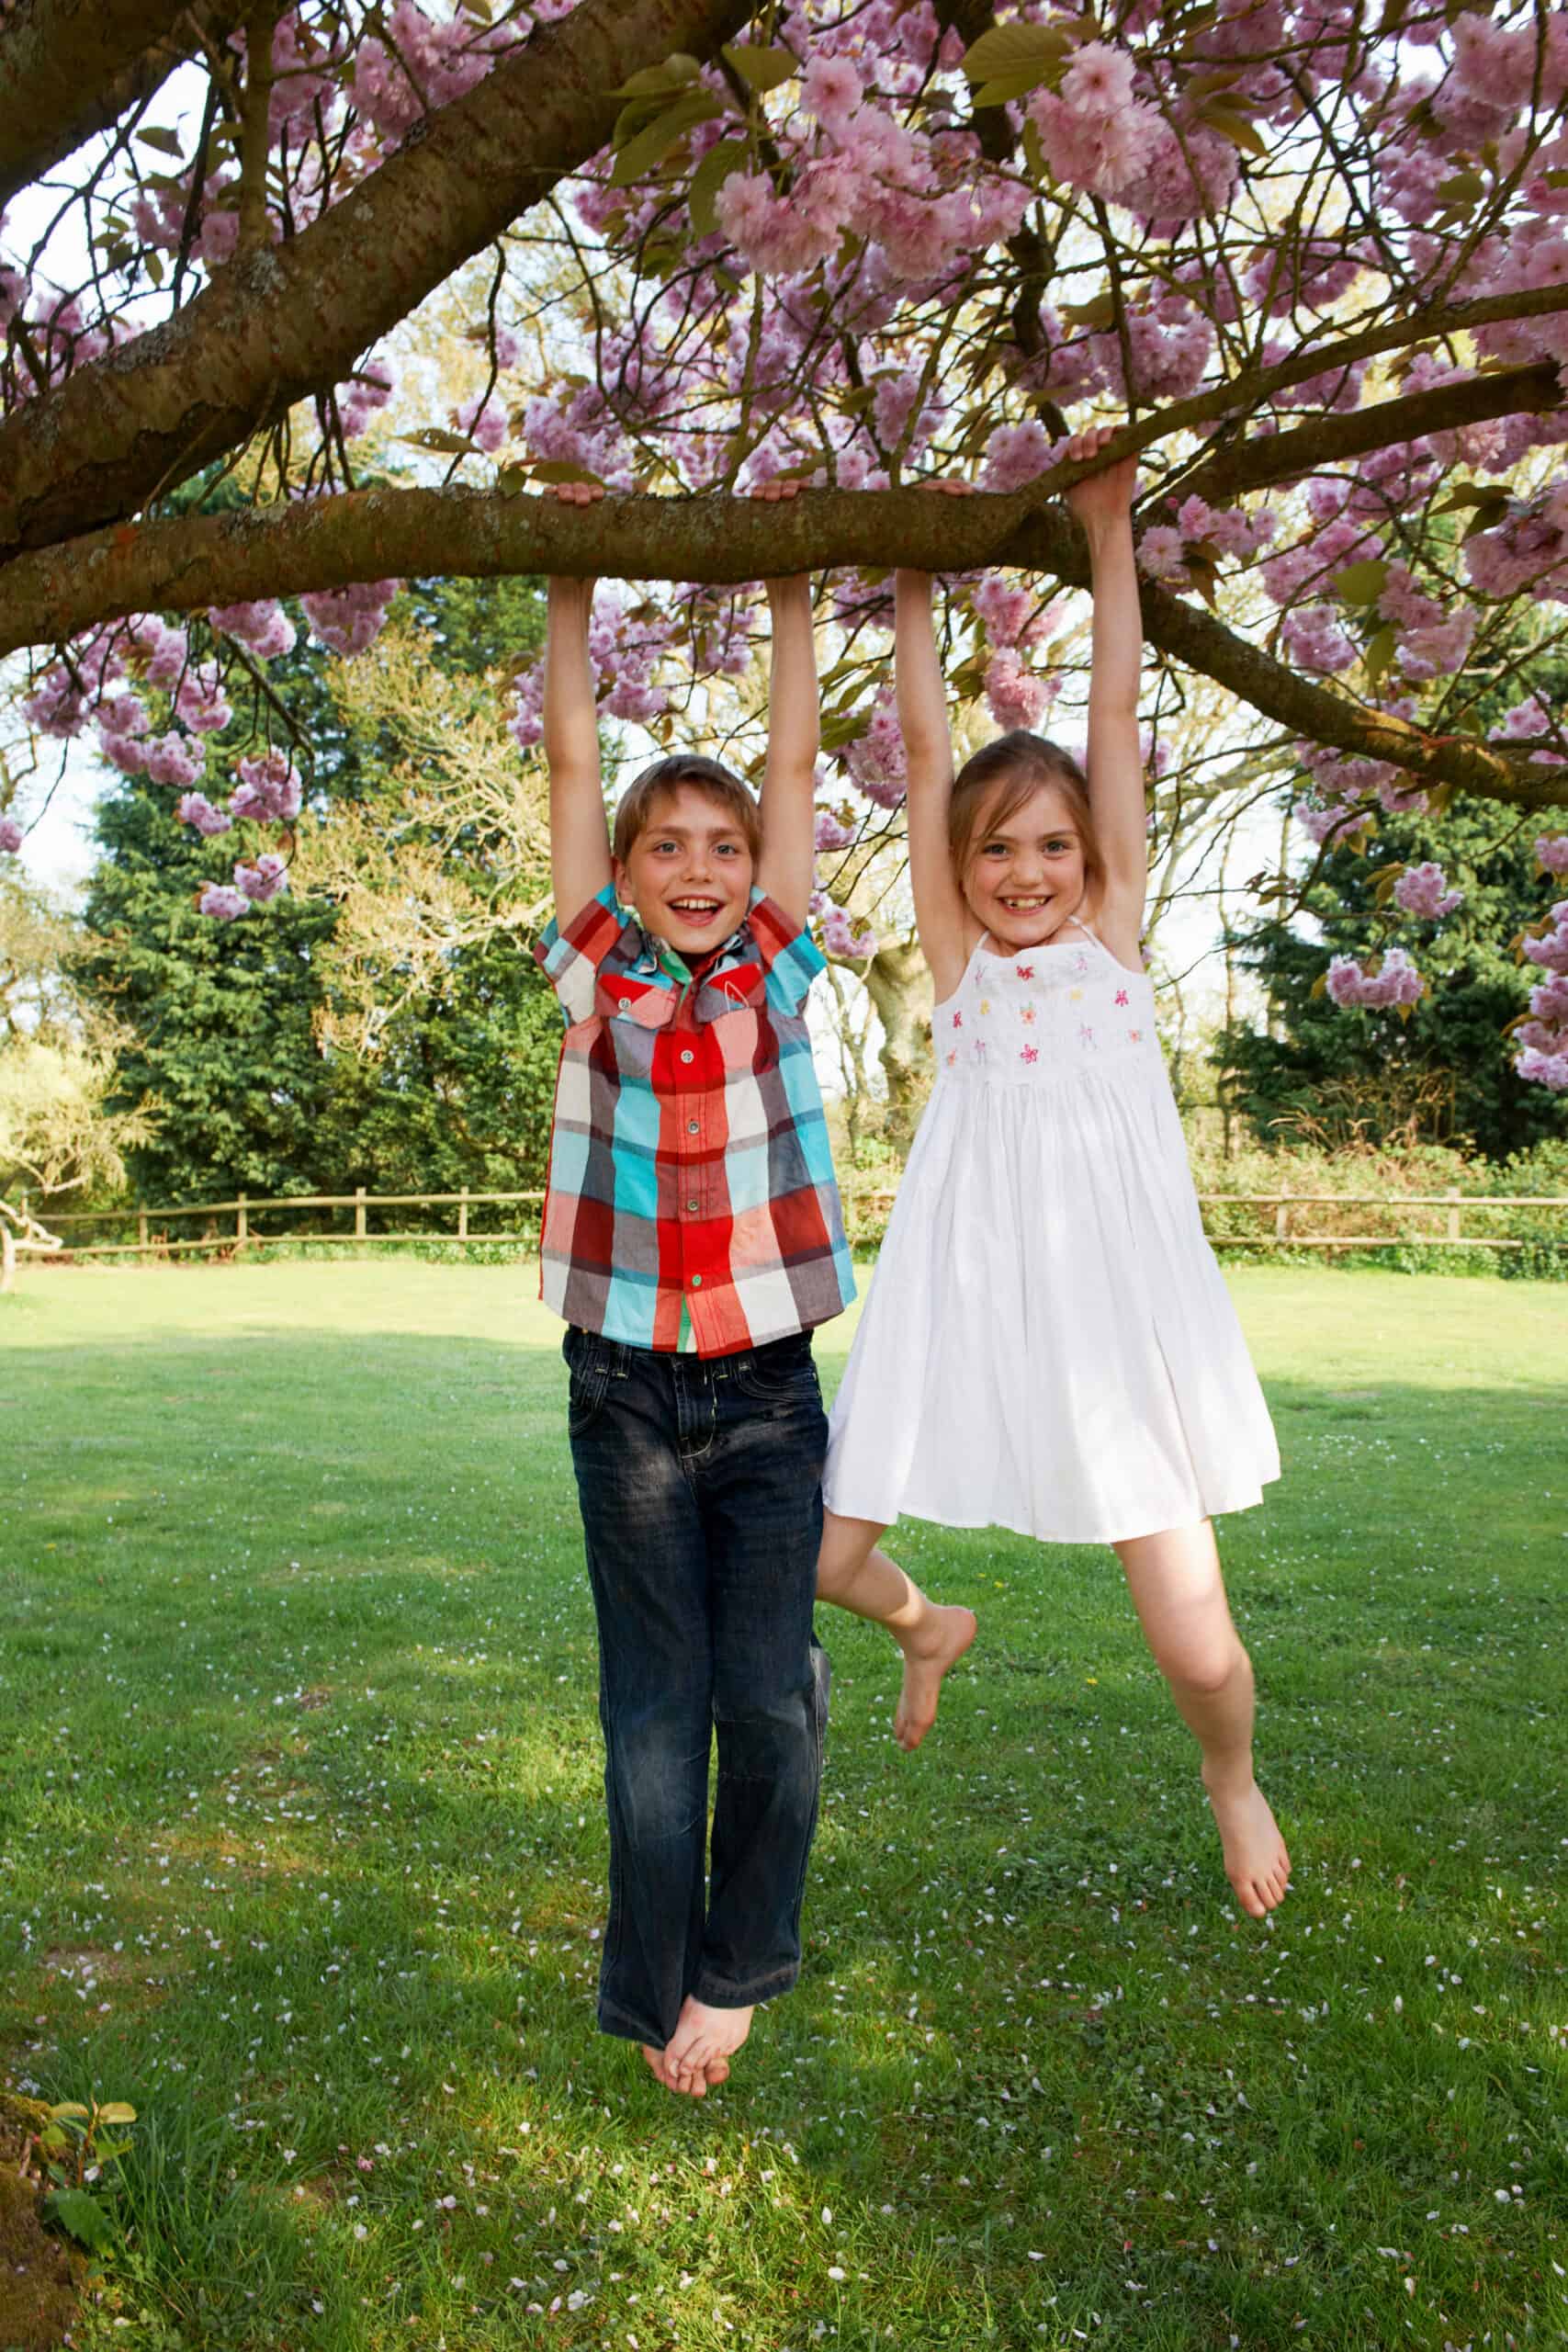 Children swinging from tree in backyard garden